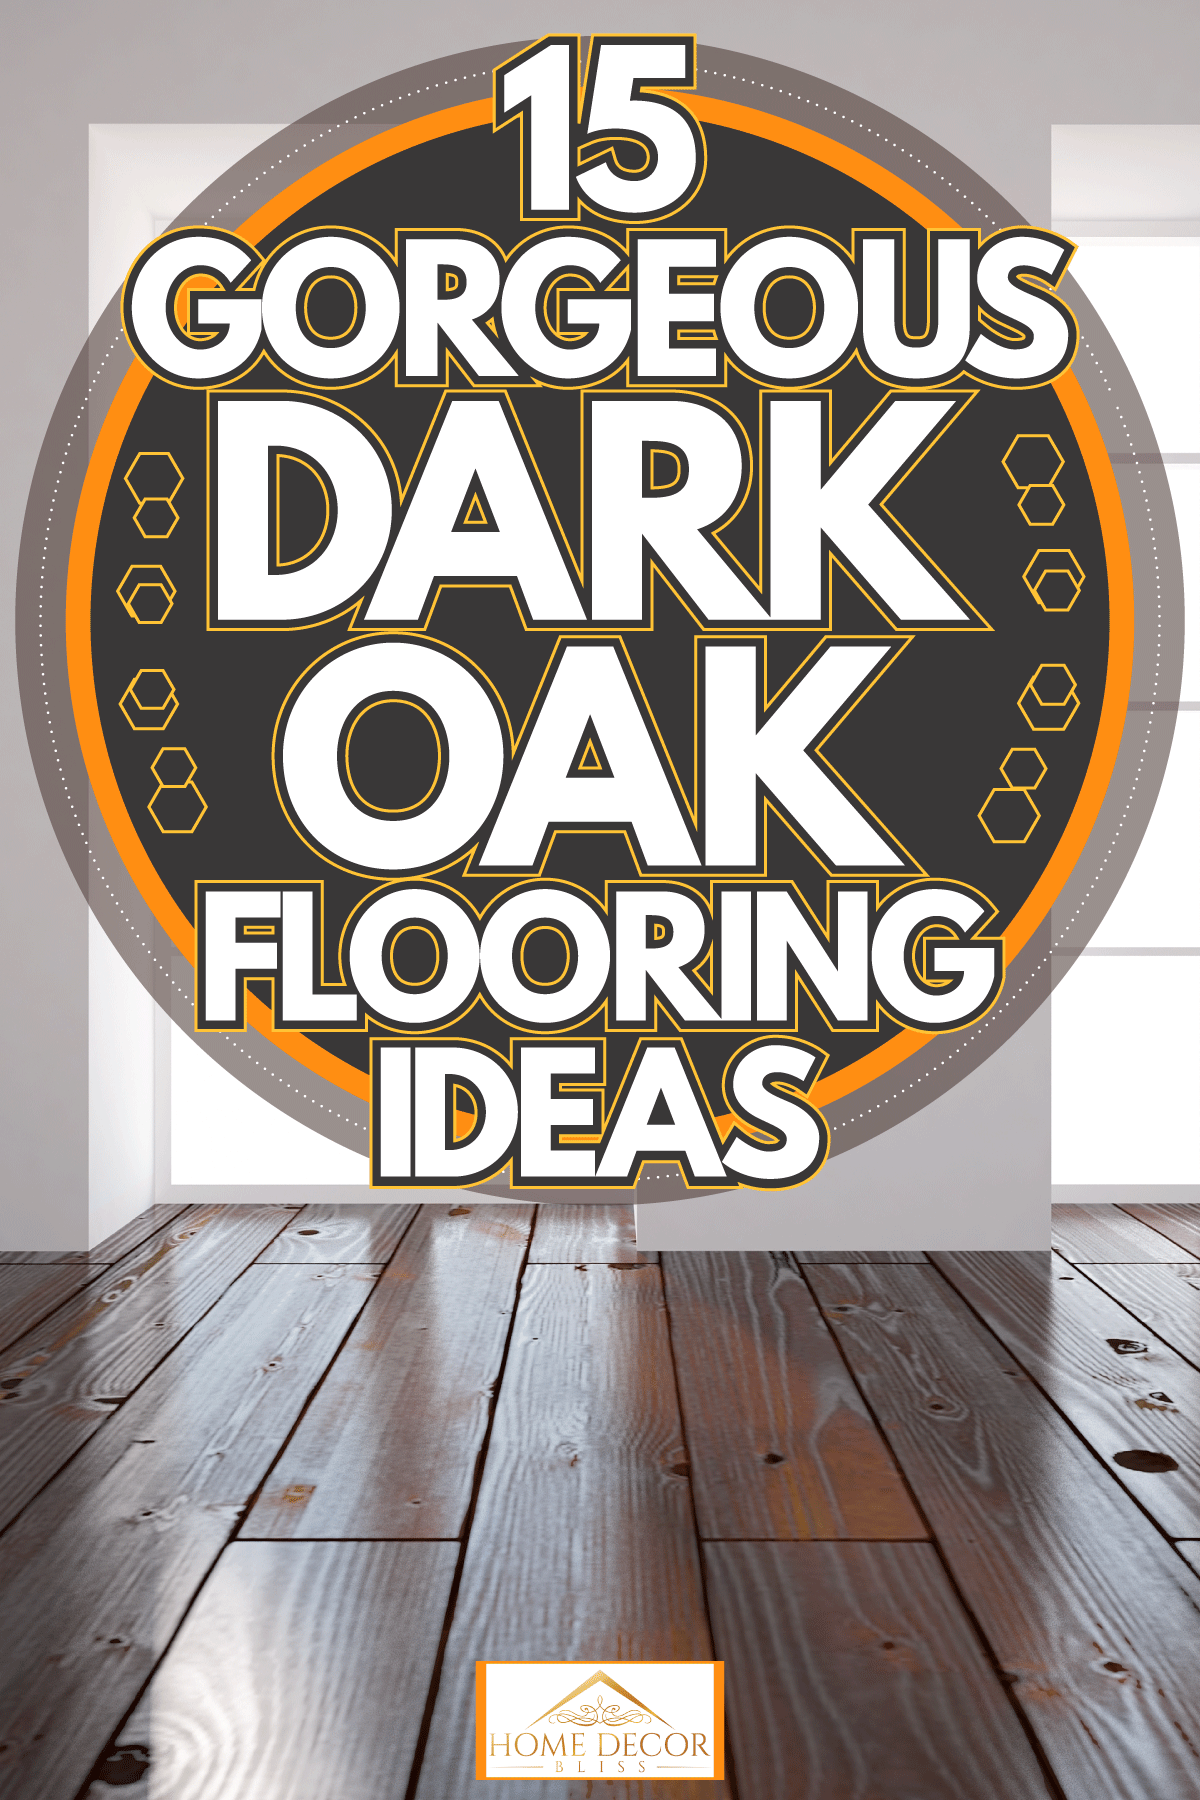 white empty interior with two windows and a dark oak wood flooring, 15 Gorgeous Dark Oak Flooring Ideas